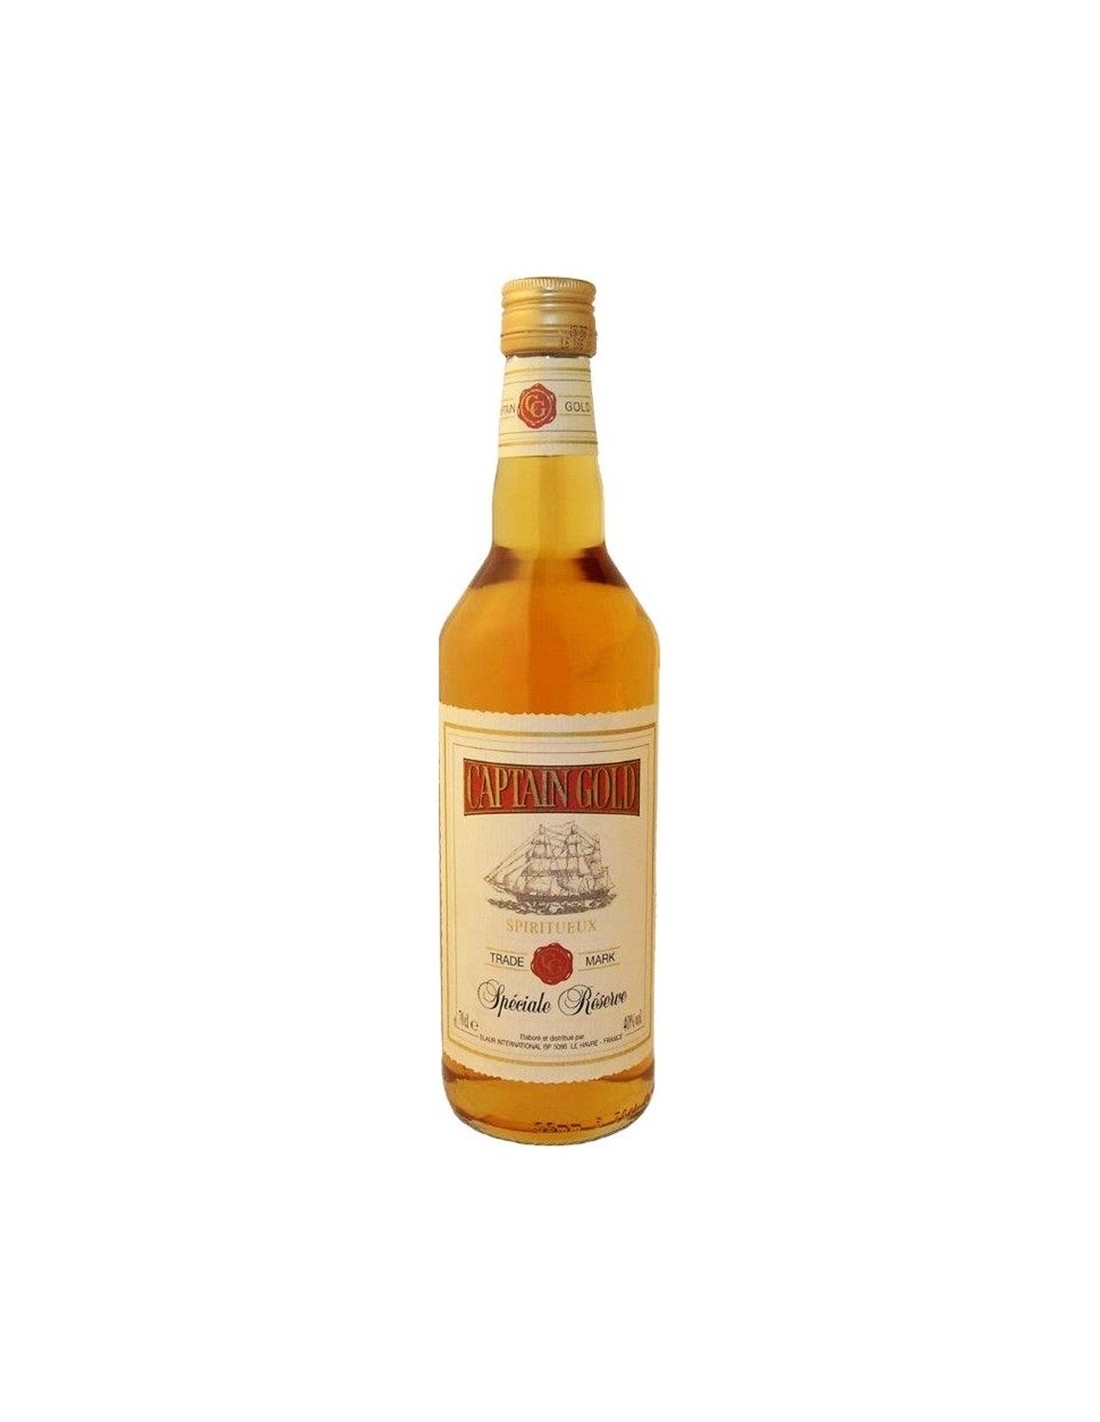 Whisky Captain Gold 0.7L, 40% alc. alcooldiscount.ro